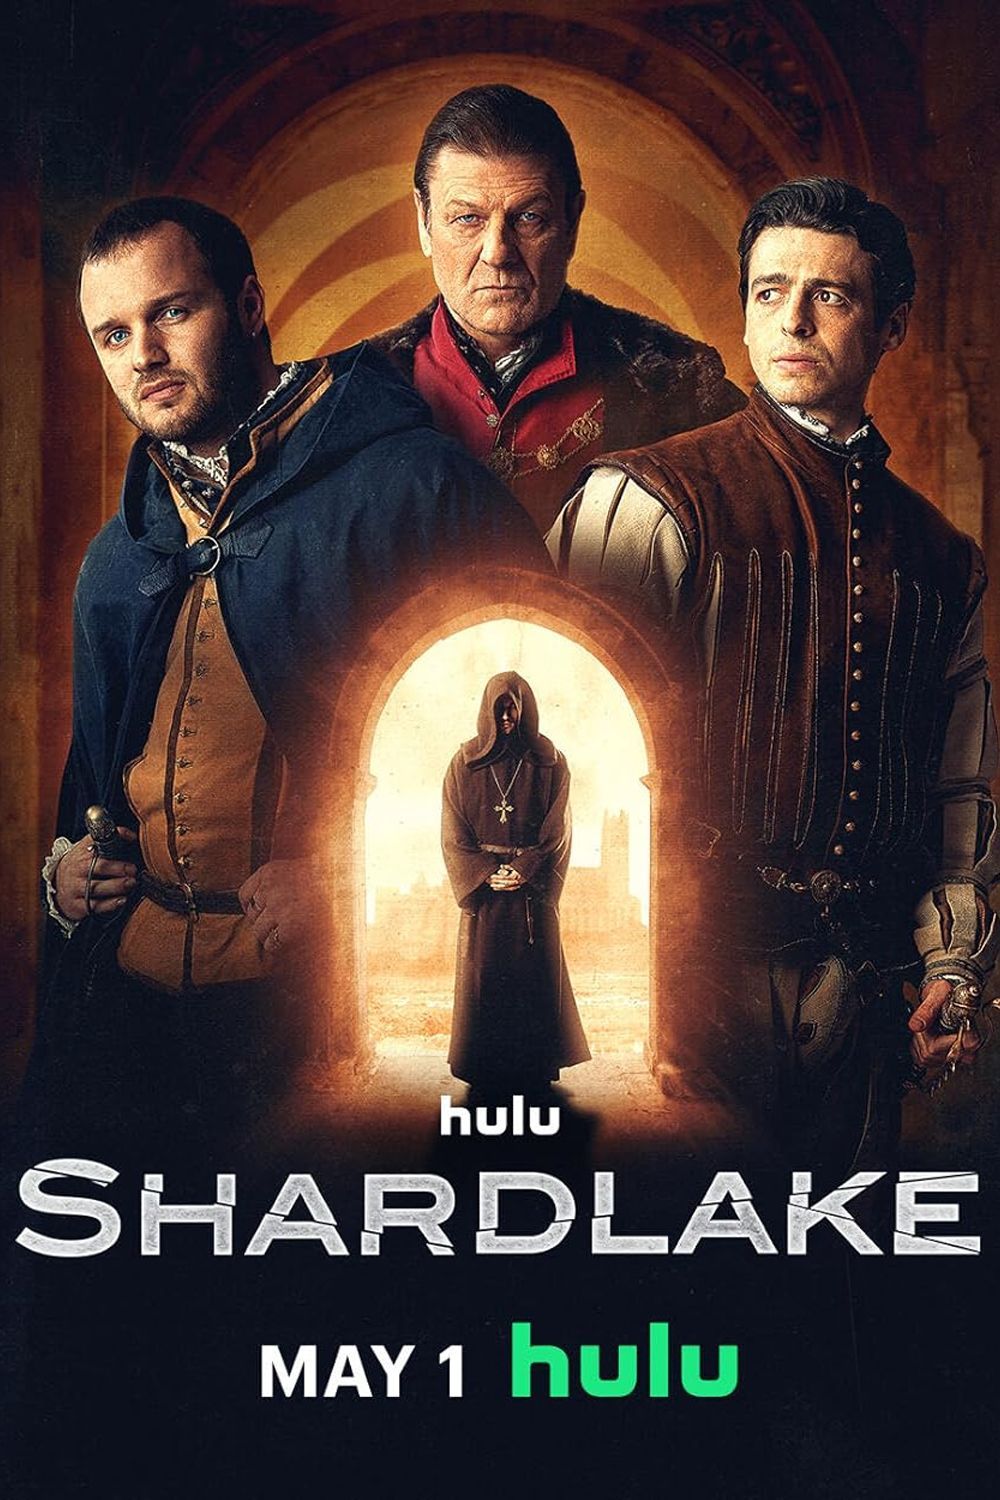 Shardlake TV show poster featuring Sean Bean